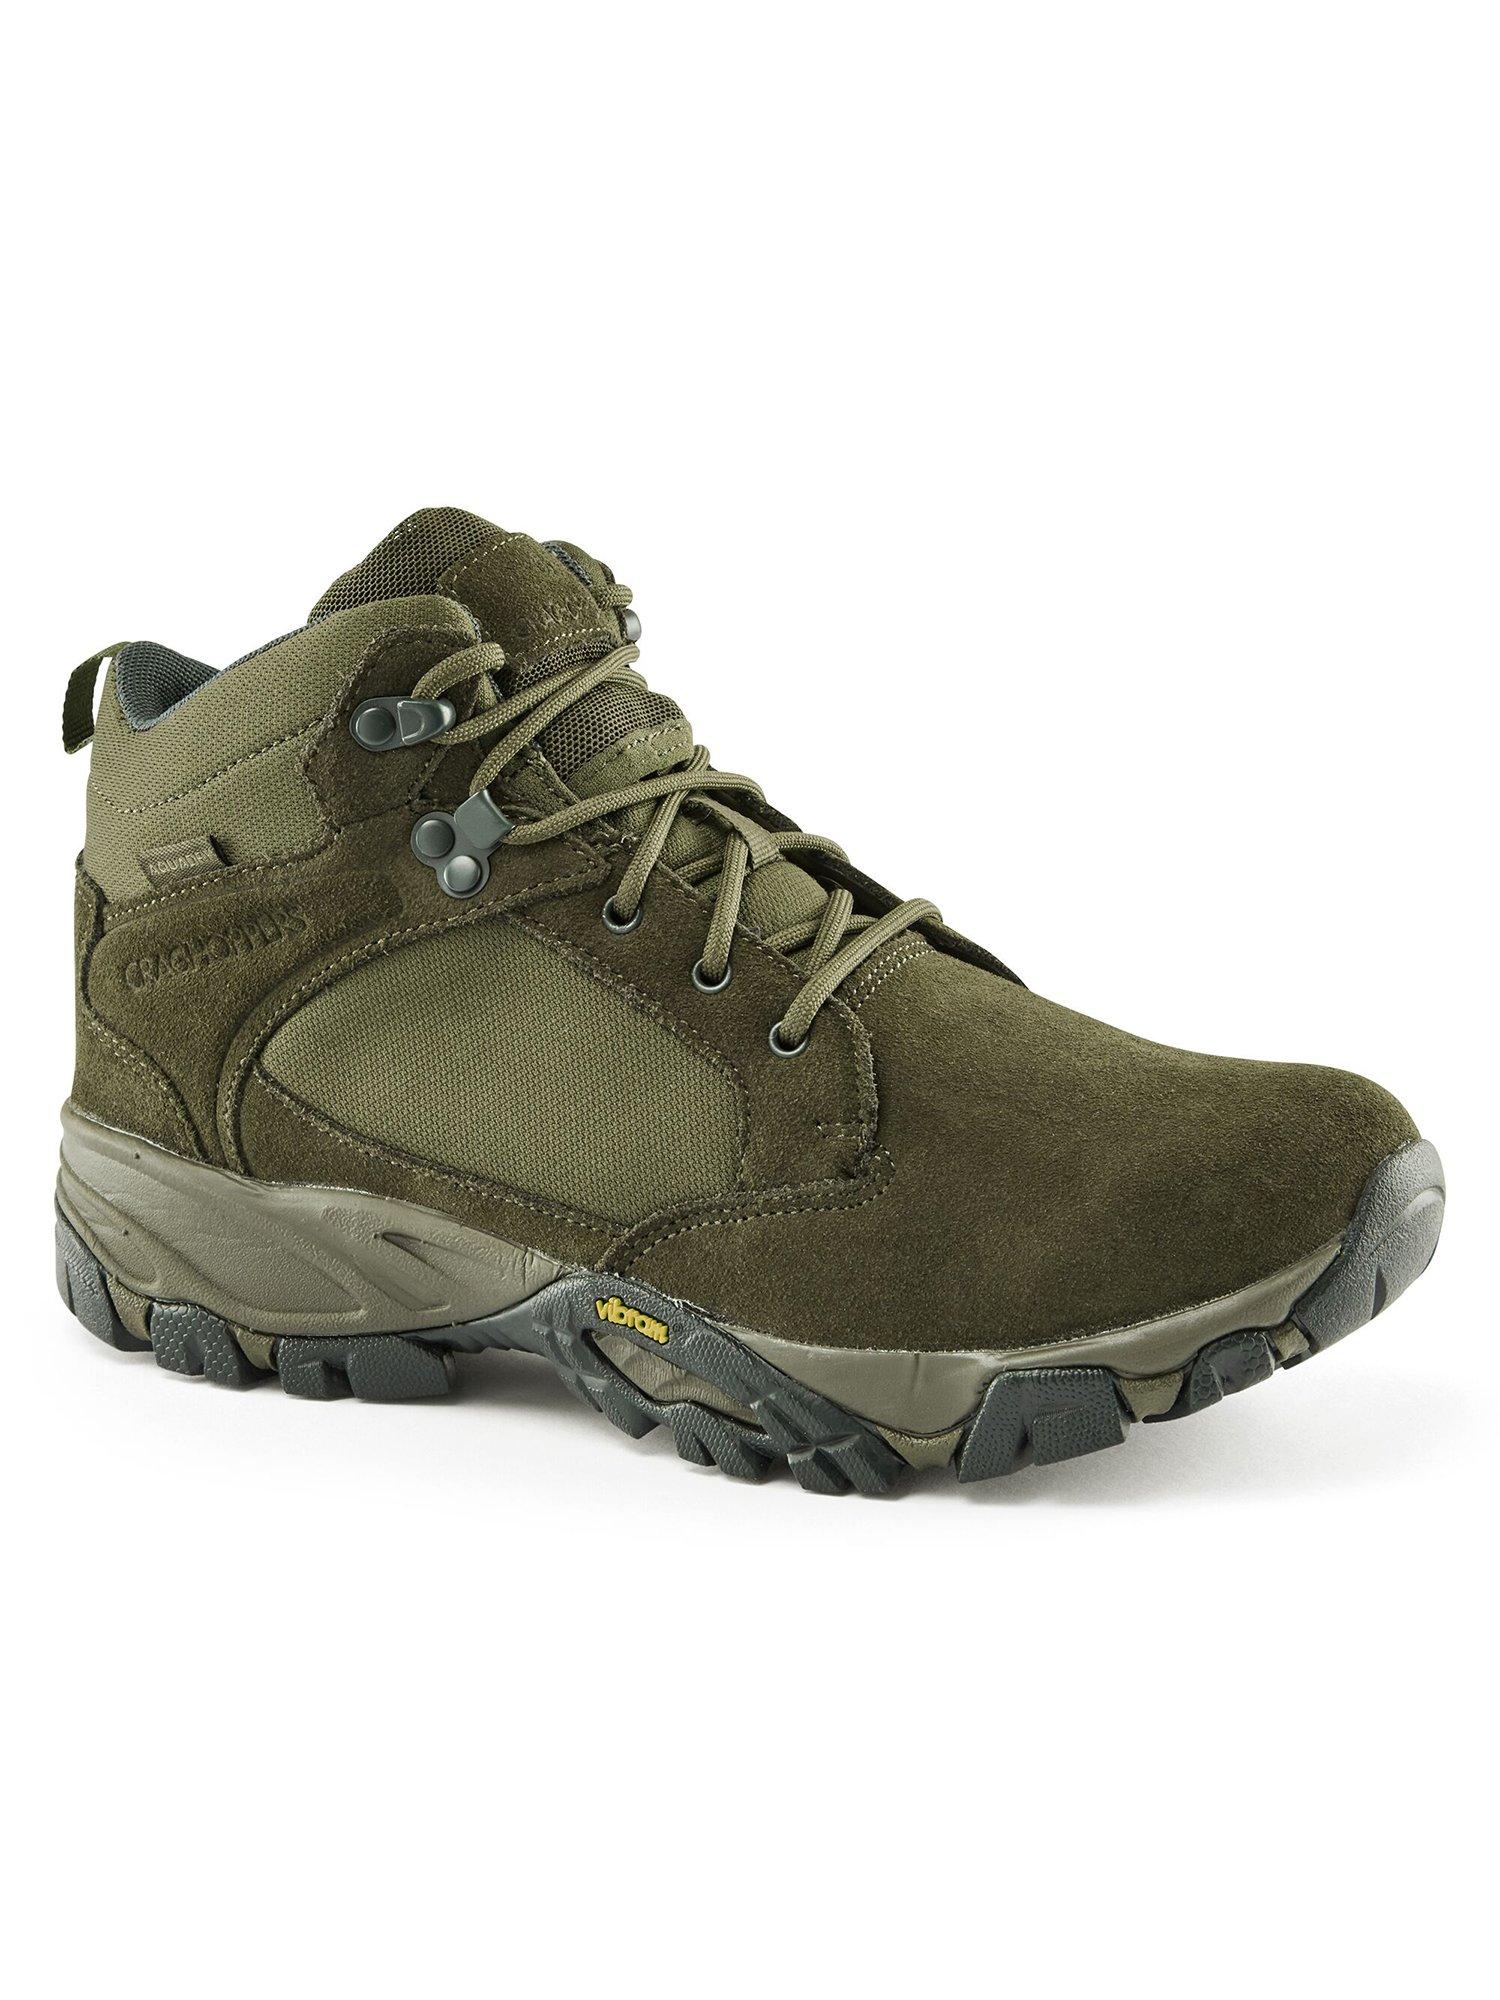 'nosilife salado' waterproof mid hiking boots